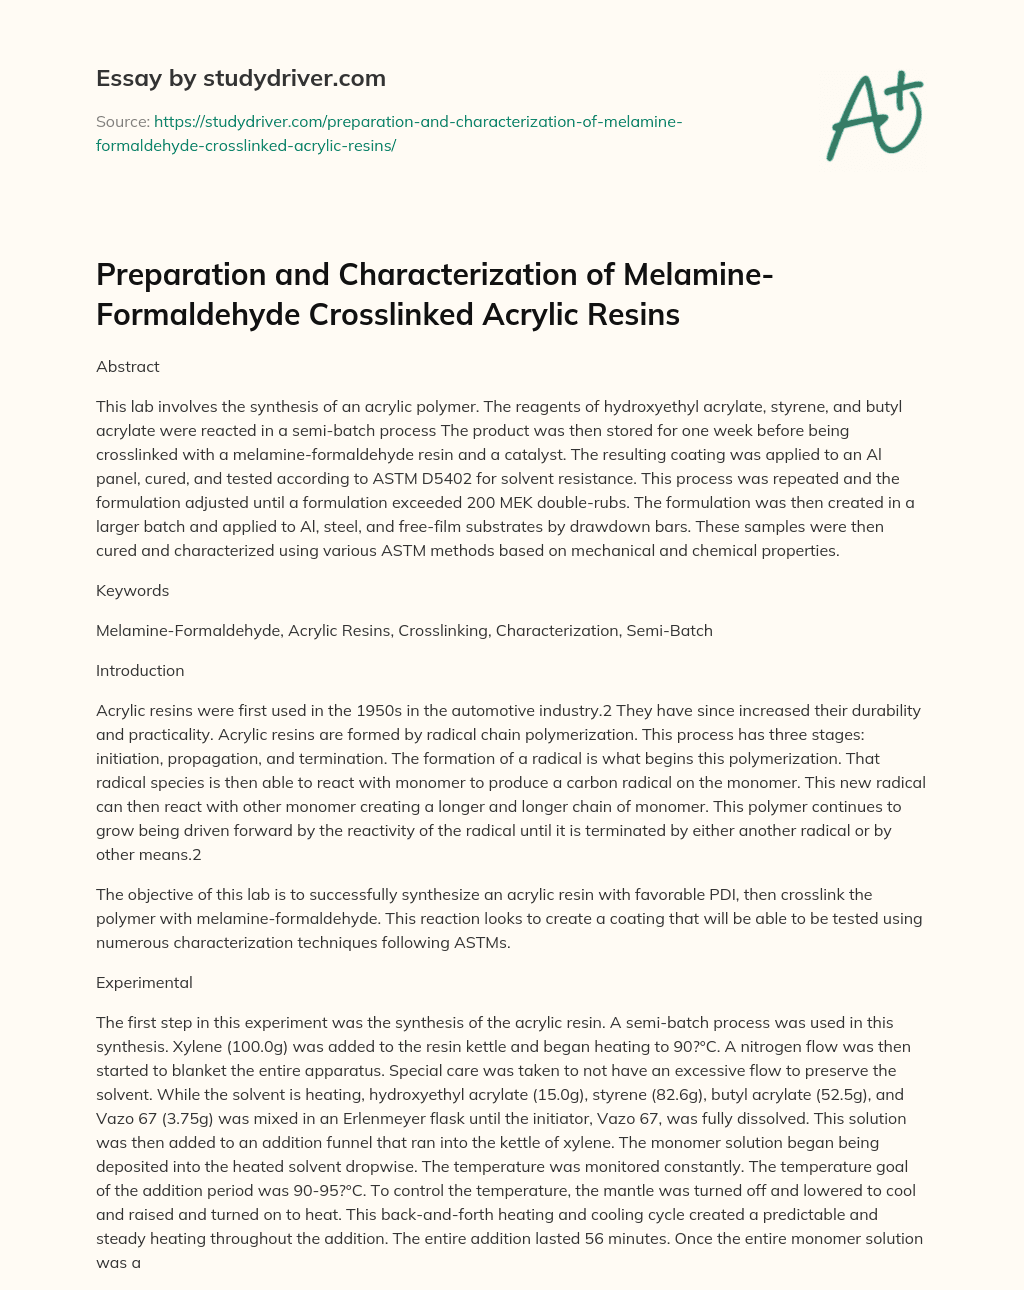 Preparation and Characterization of Melamine-Formaldehyde Crosslinked Acrylic Resins essay